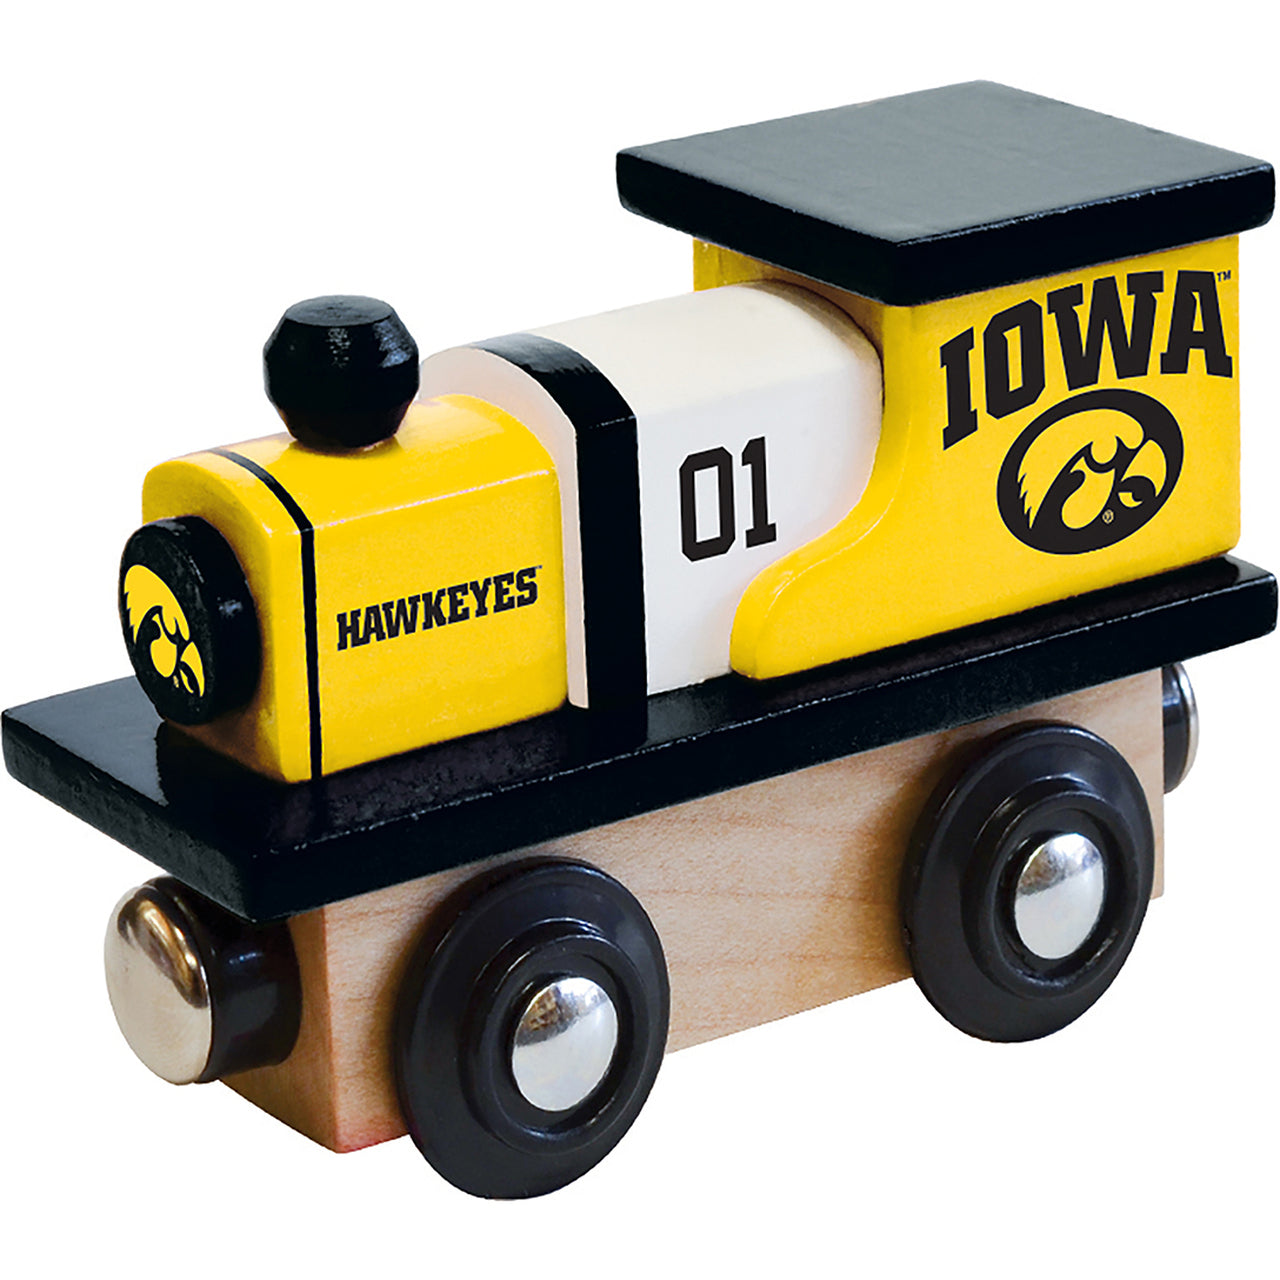 Iowa Hawkeyes Wooden Toy Train Engine by Masterpieces